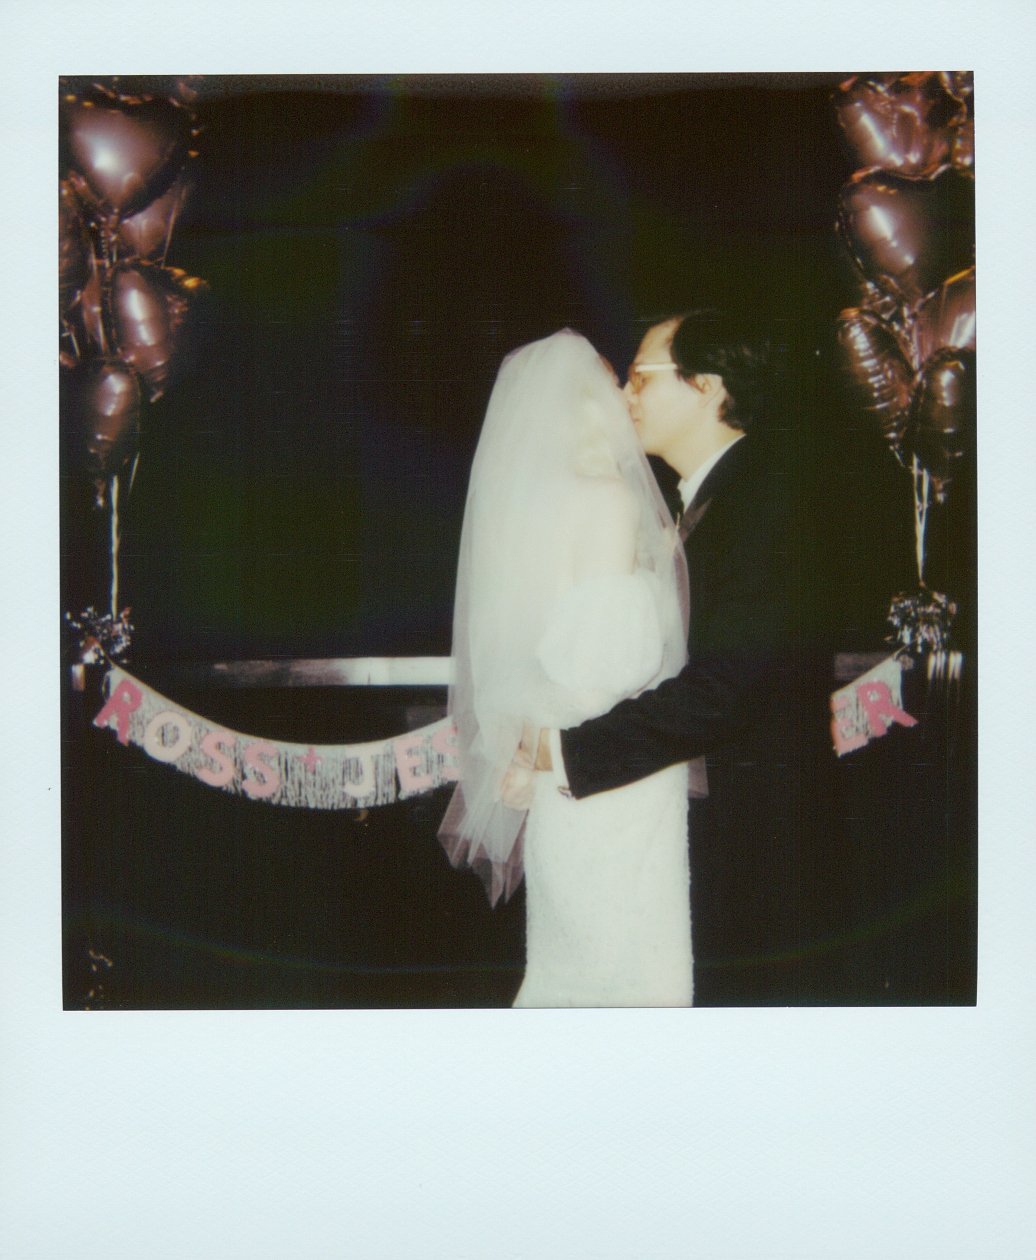 Wedding-taken-on-polaroids31.jpg